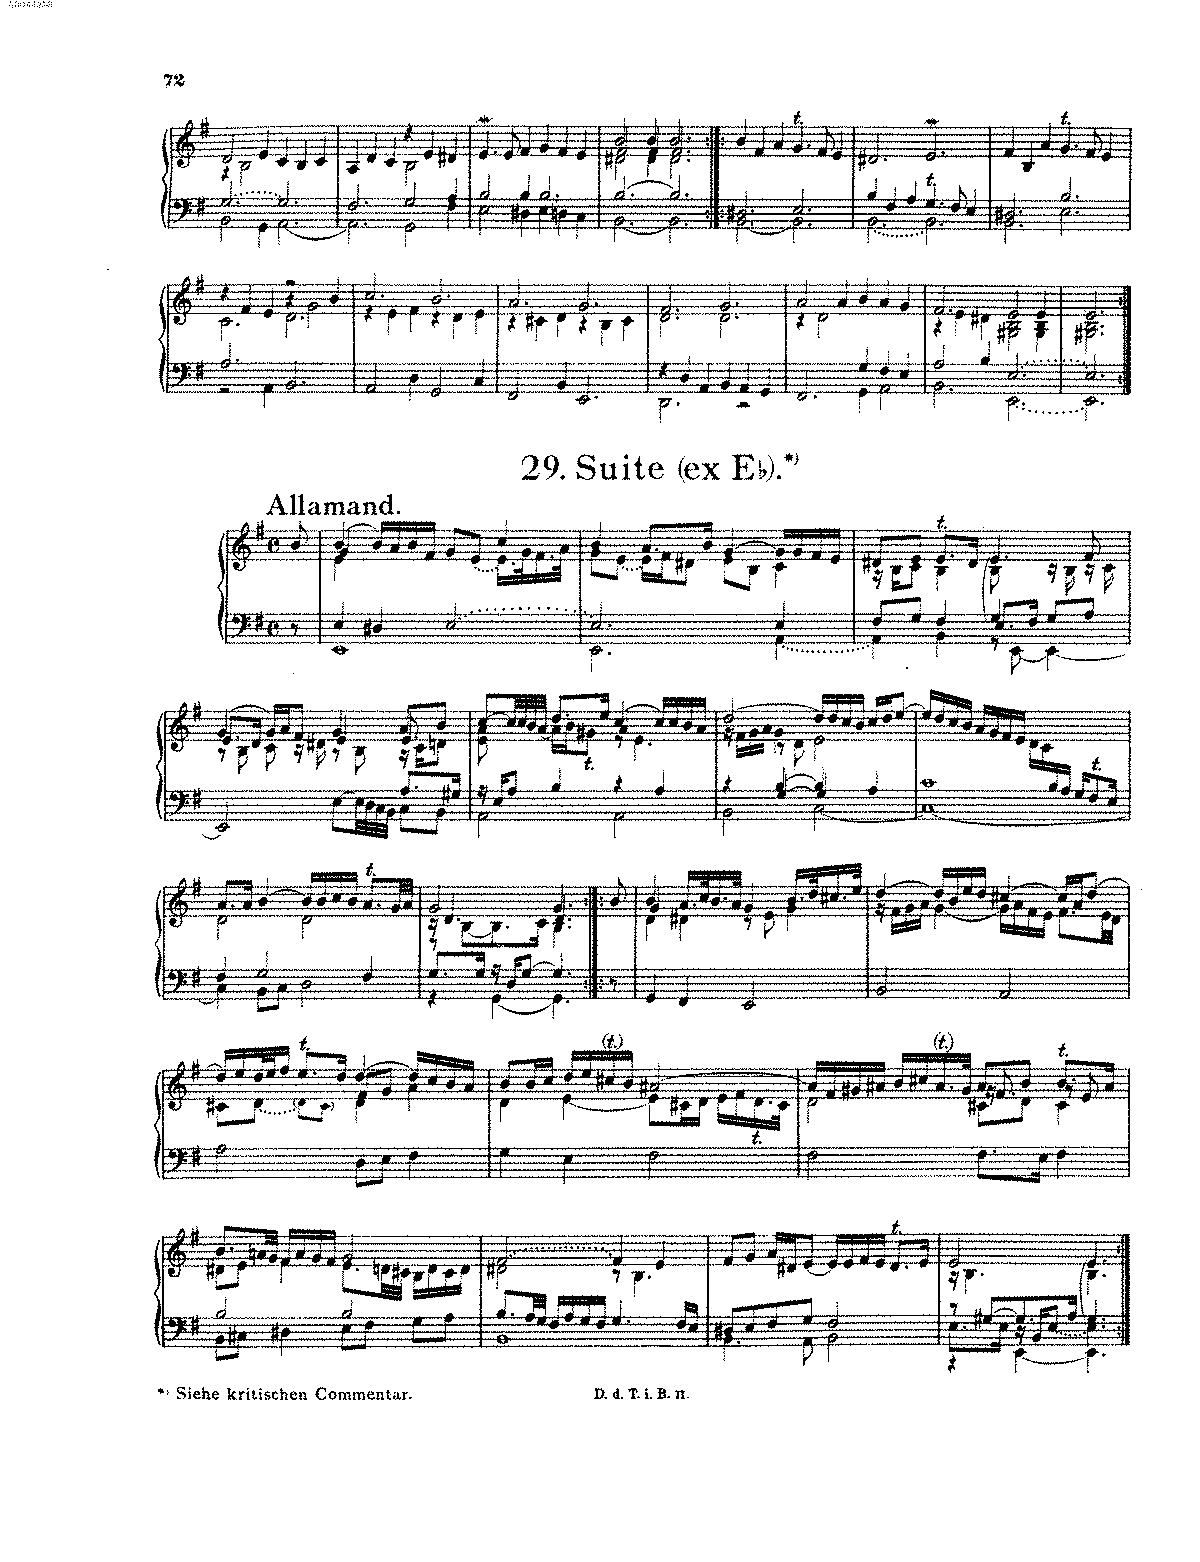 Suite in E minor, P.436 (Pachelbel, Johann) - IMSLP